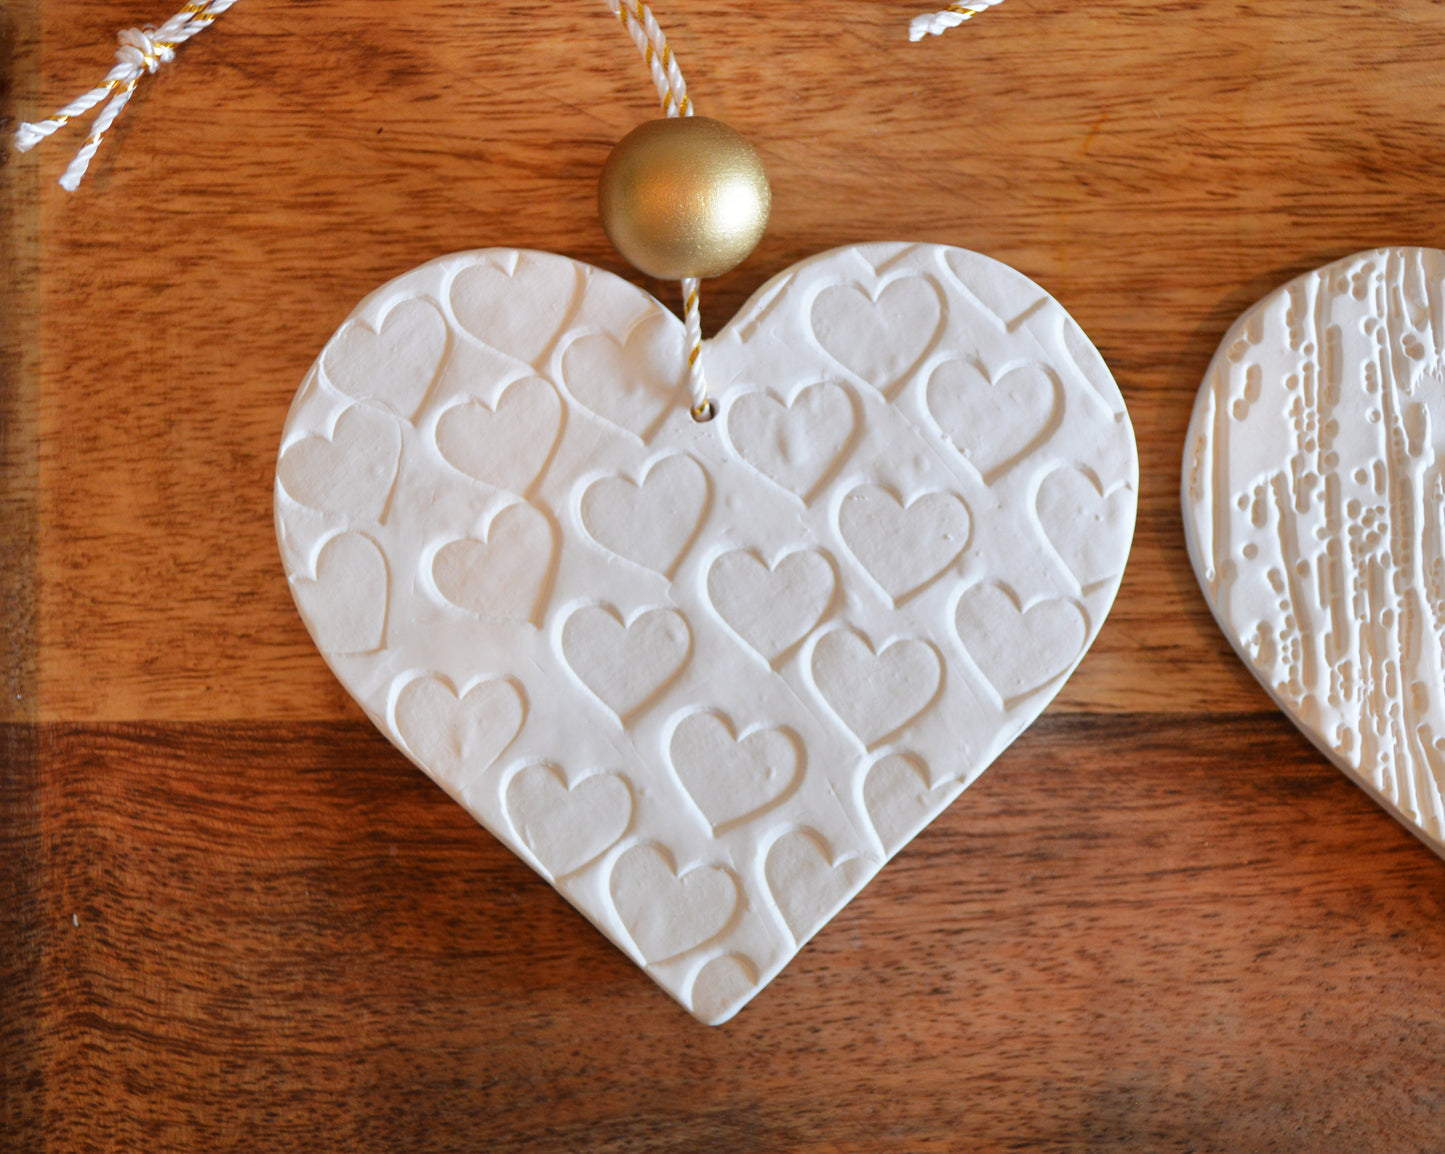 3 pure white heart shaped ornaments